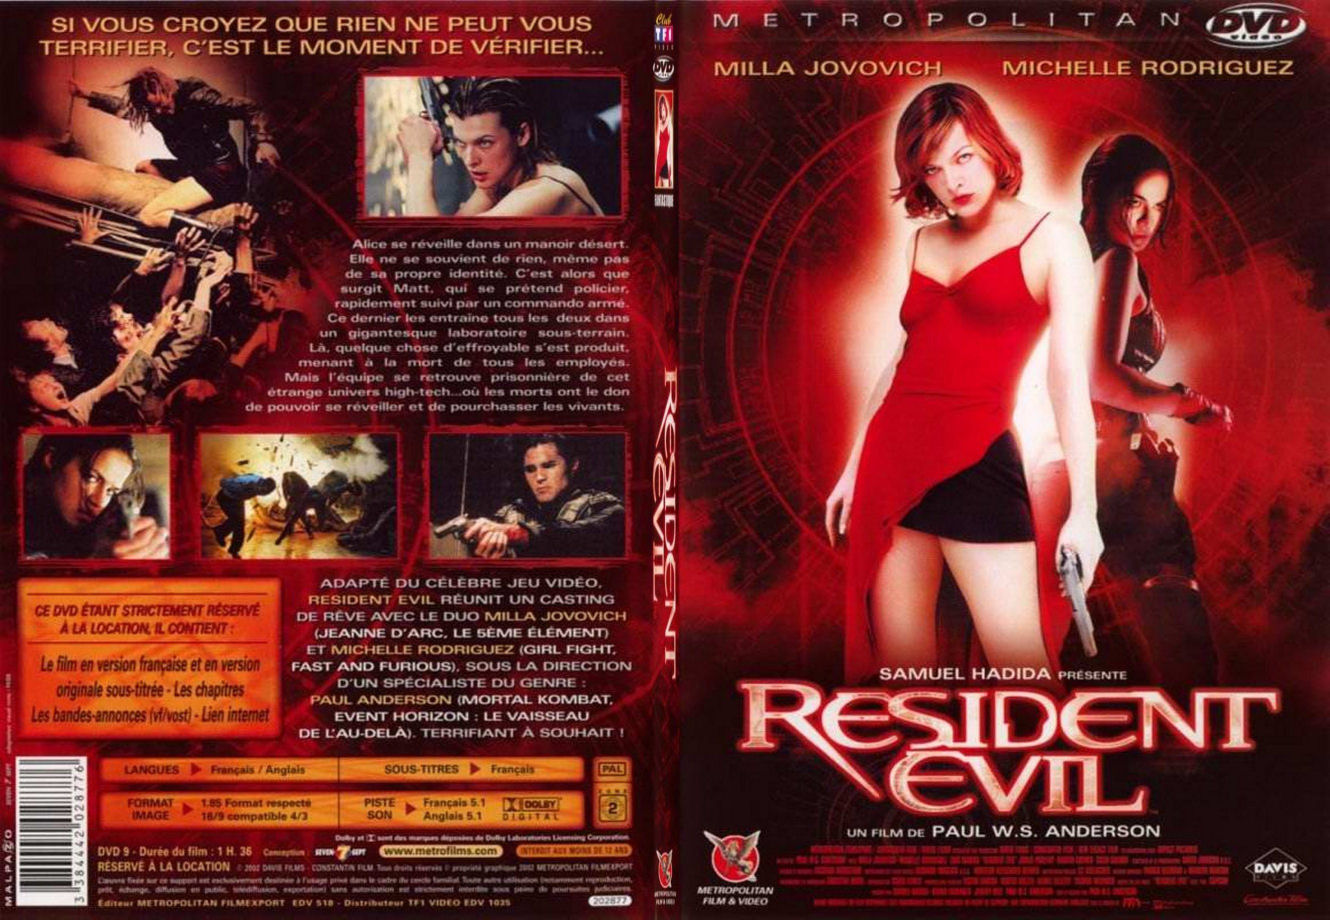 Jaquette DVD Resident evil - SLIM